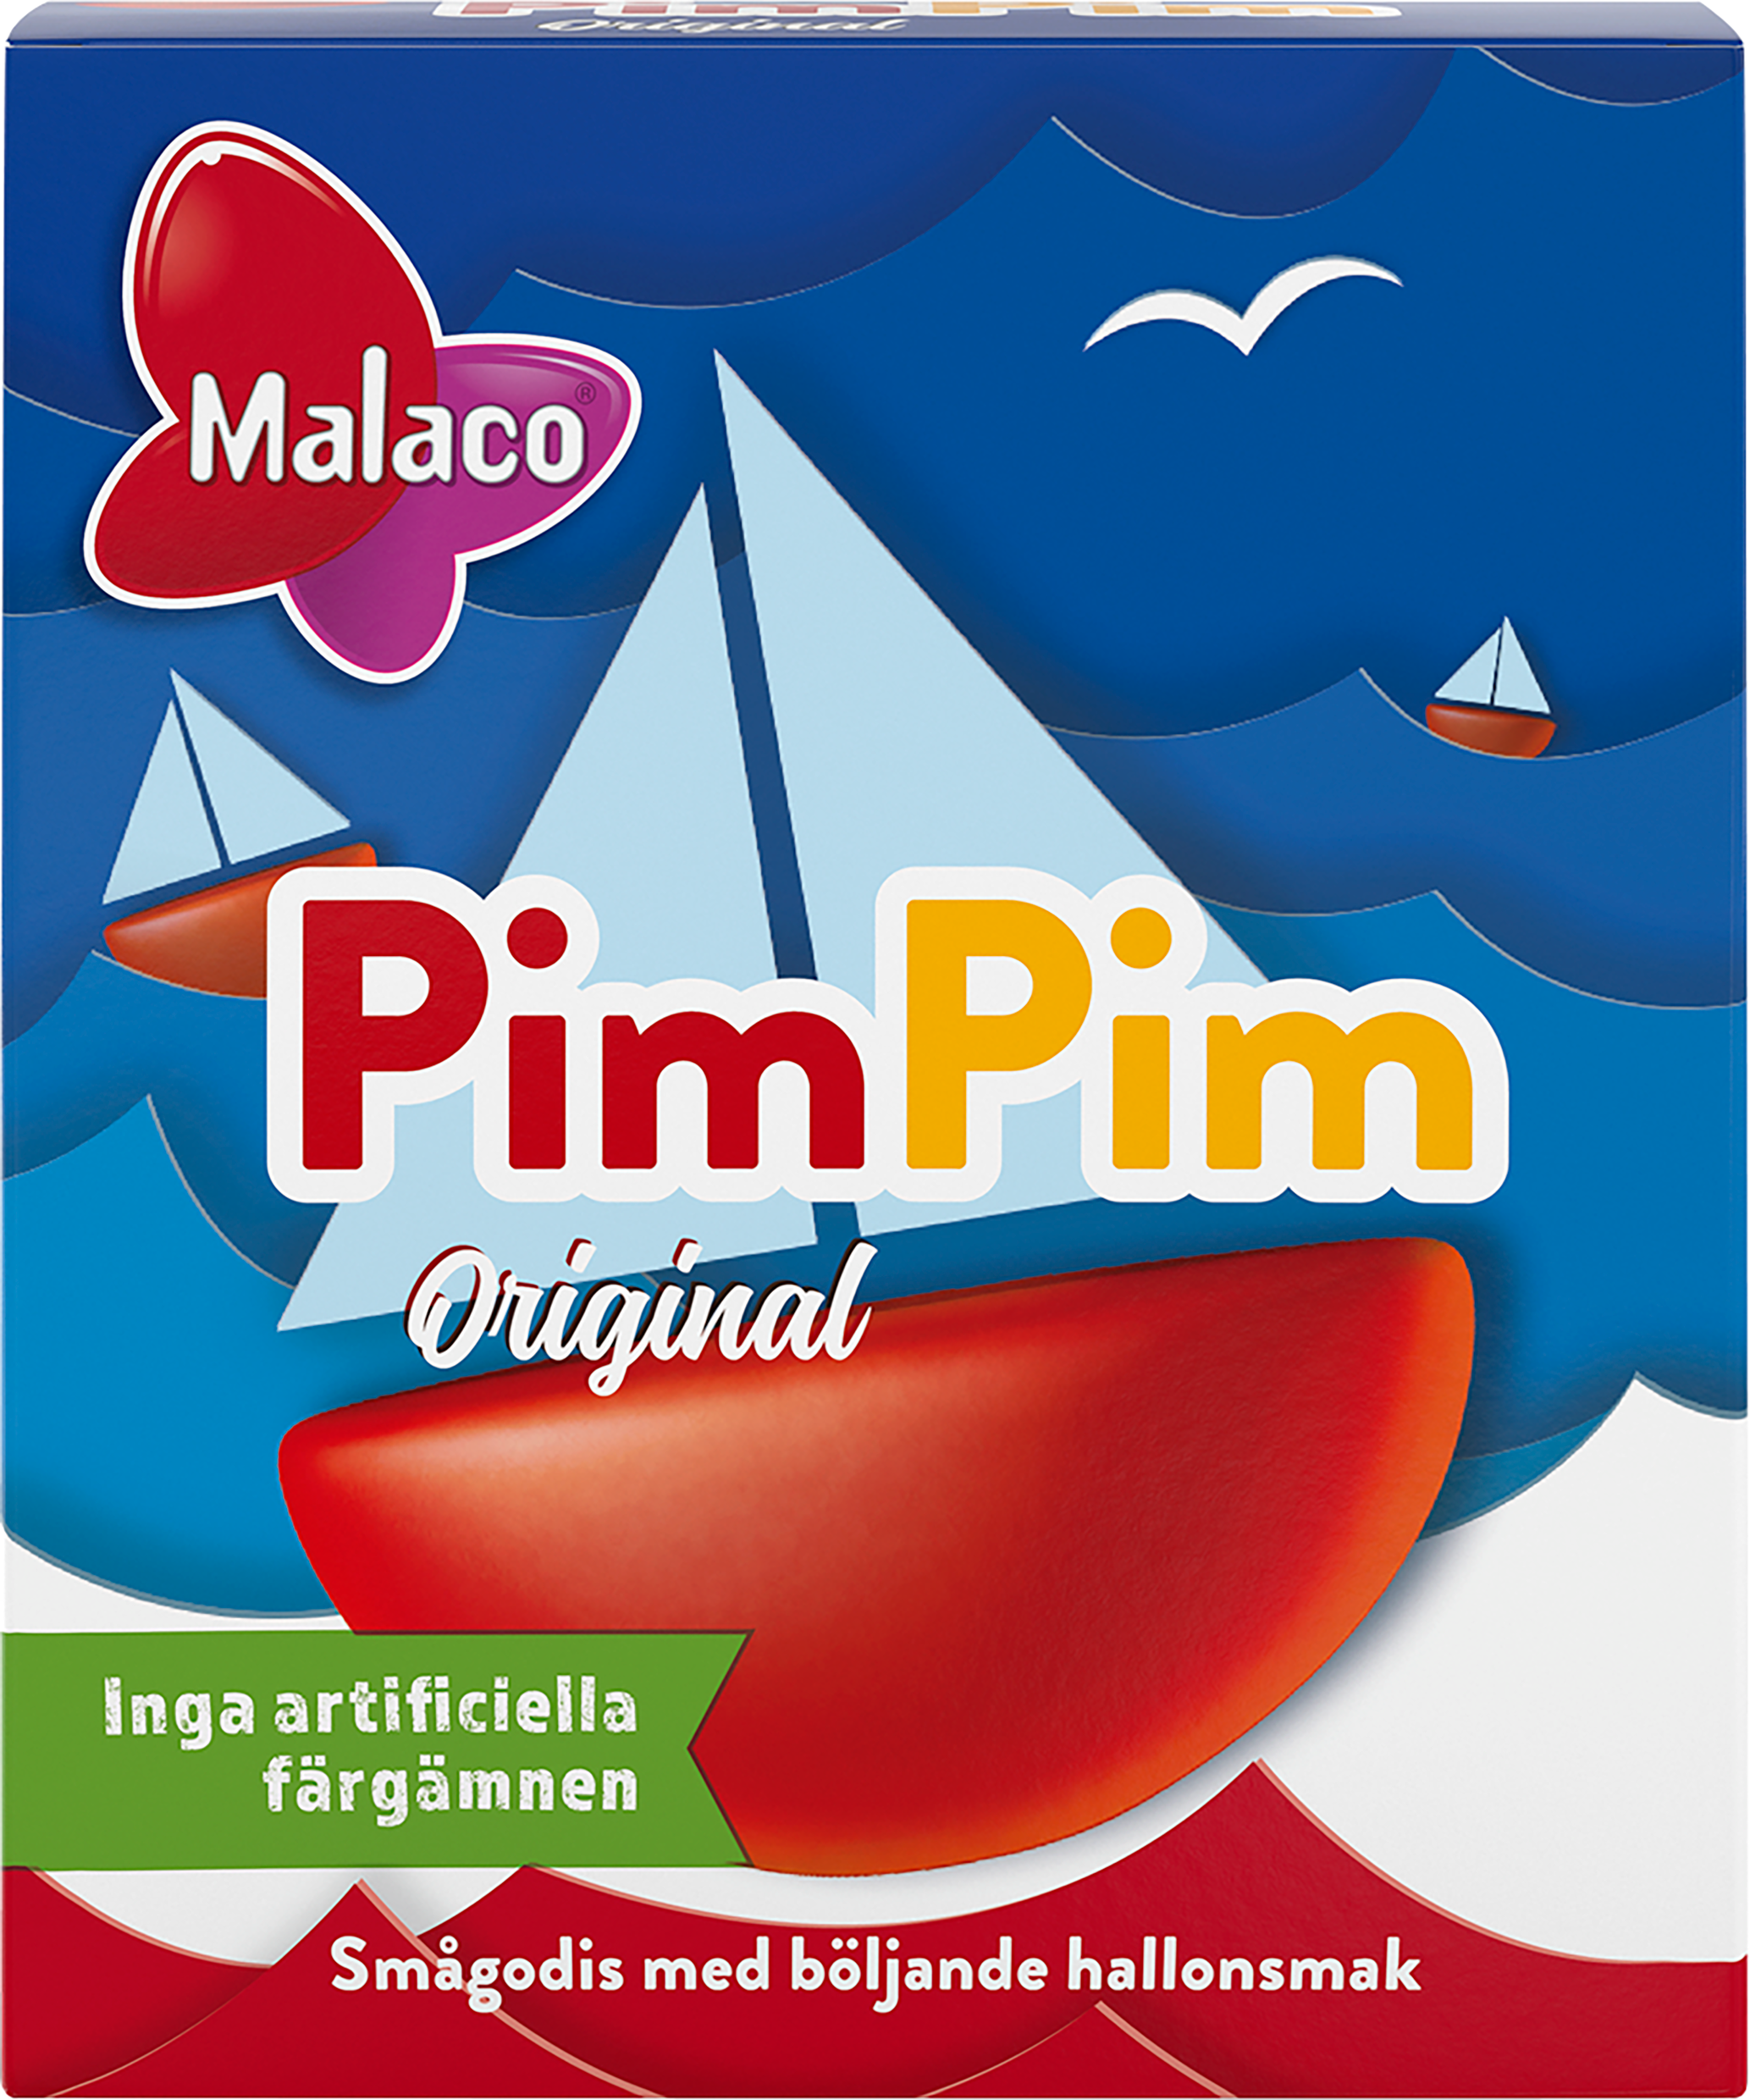 Malaco PimPim Pastilles by Sweet Side of Sweden